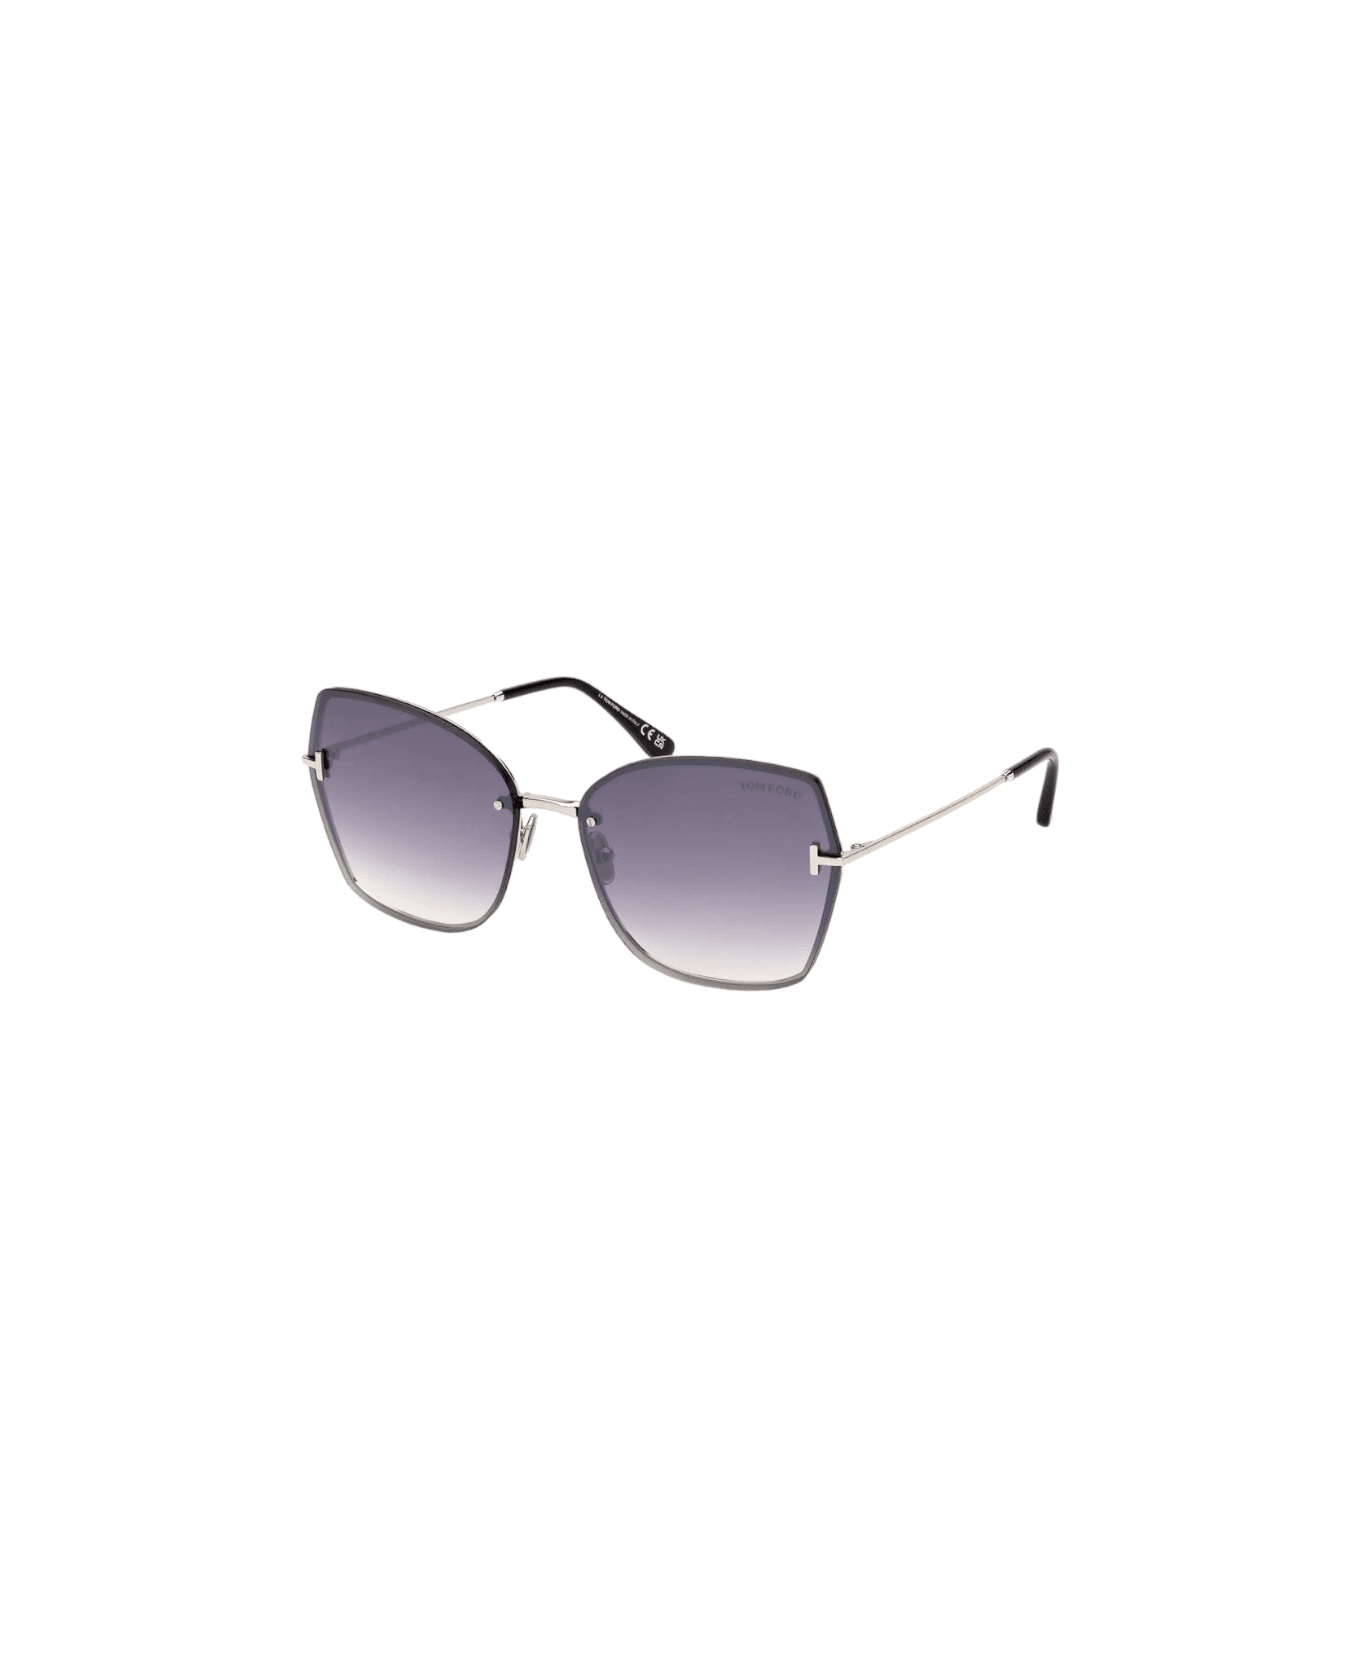 Tom Ford Eyewear Nickie - Ft 1107 /s Sunglasses